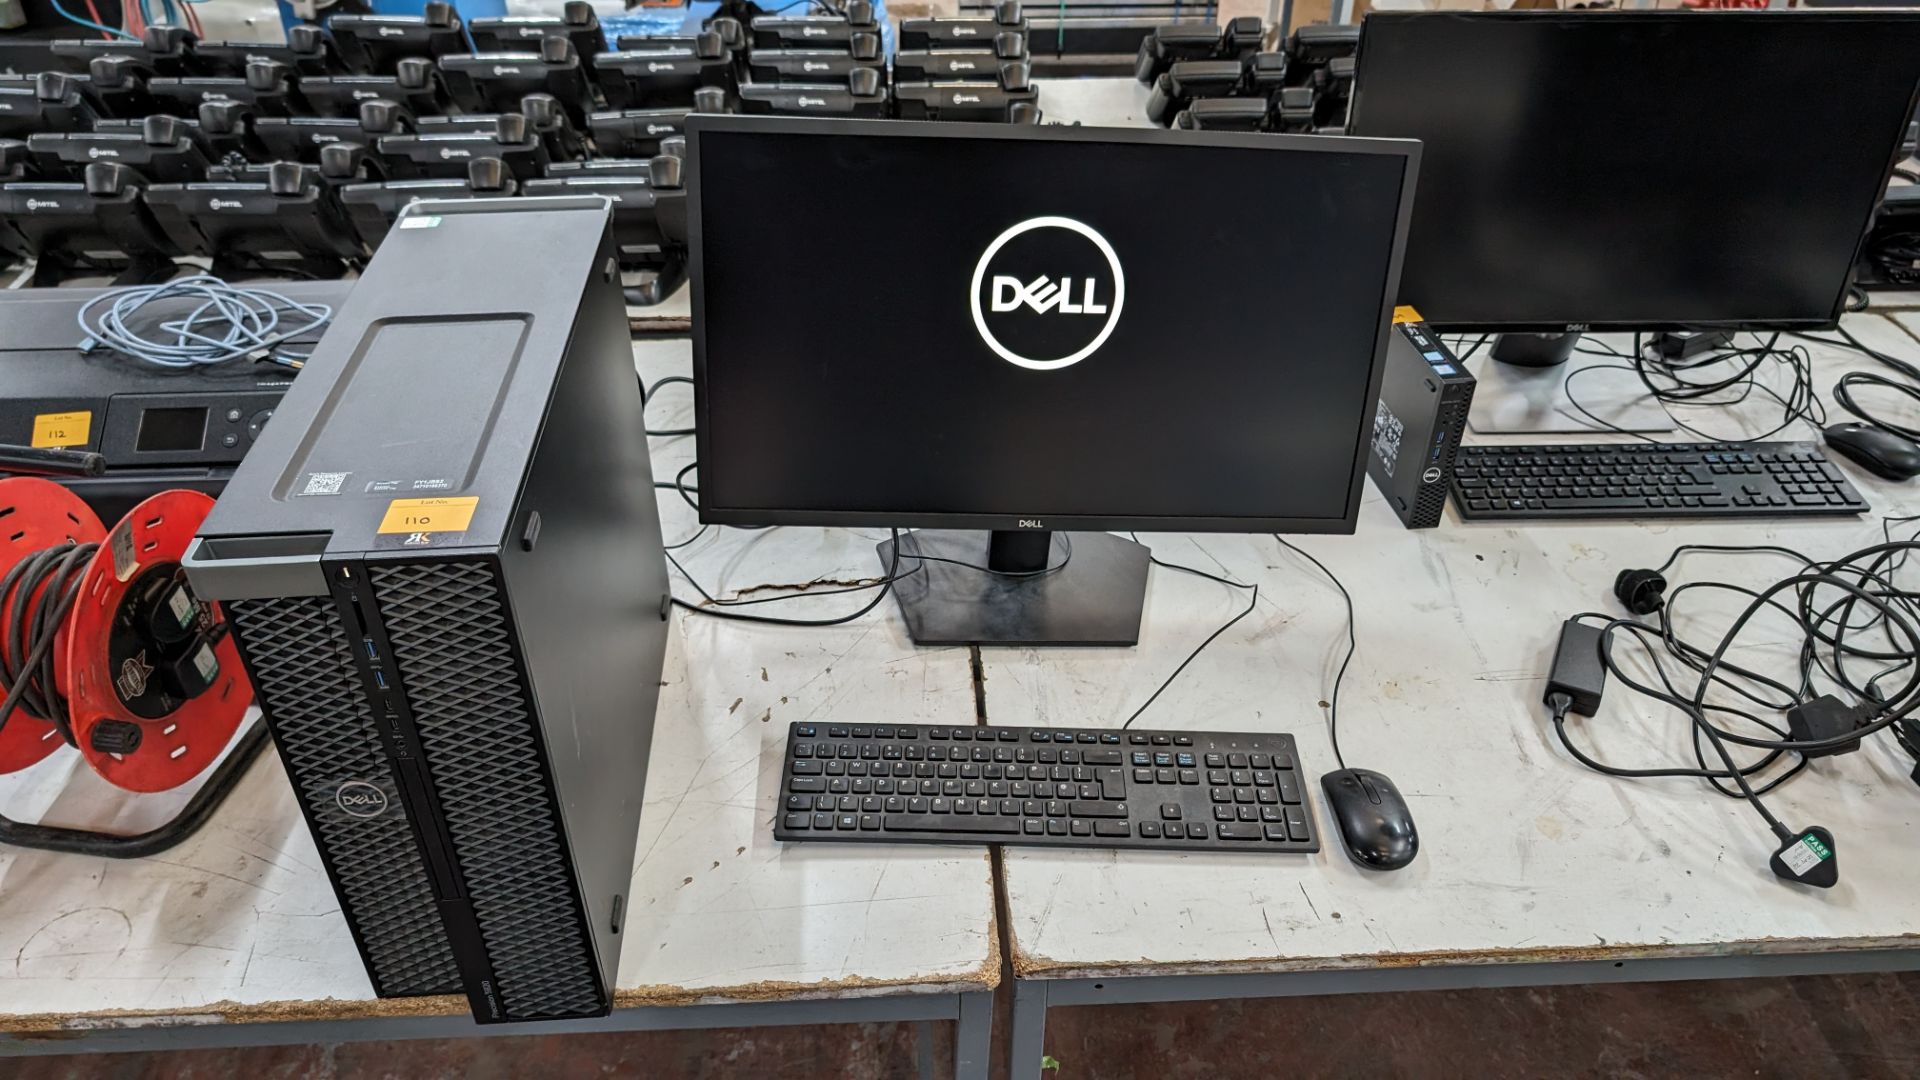 Dell Precision 5820 tower workstation with Intel Xeon CPU, Nvidia Quadro P4000 graphics card includi - Image 10 of 14